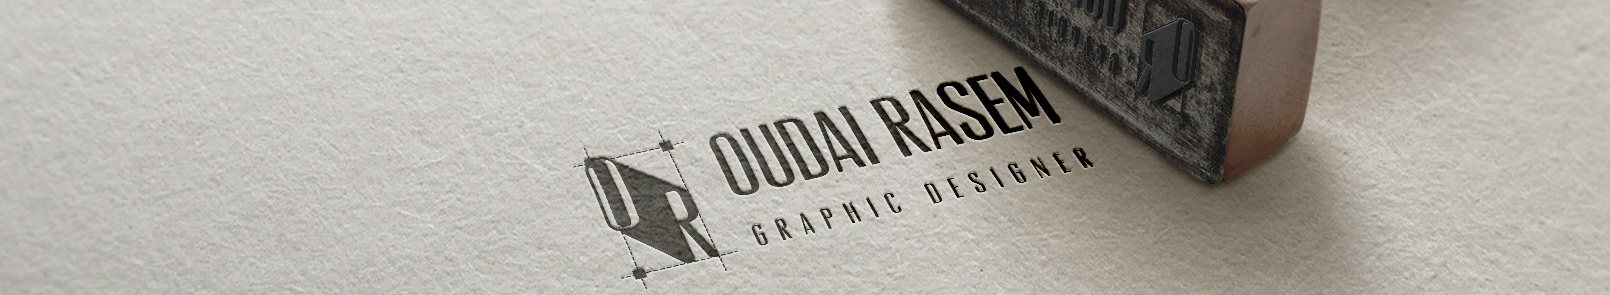 Oudai Rasem profil başlığı